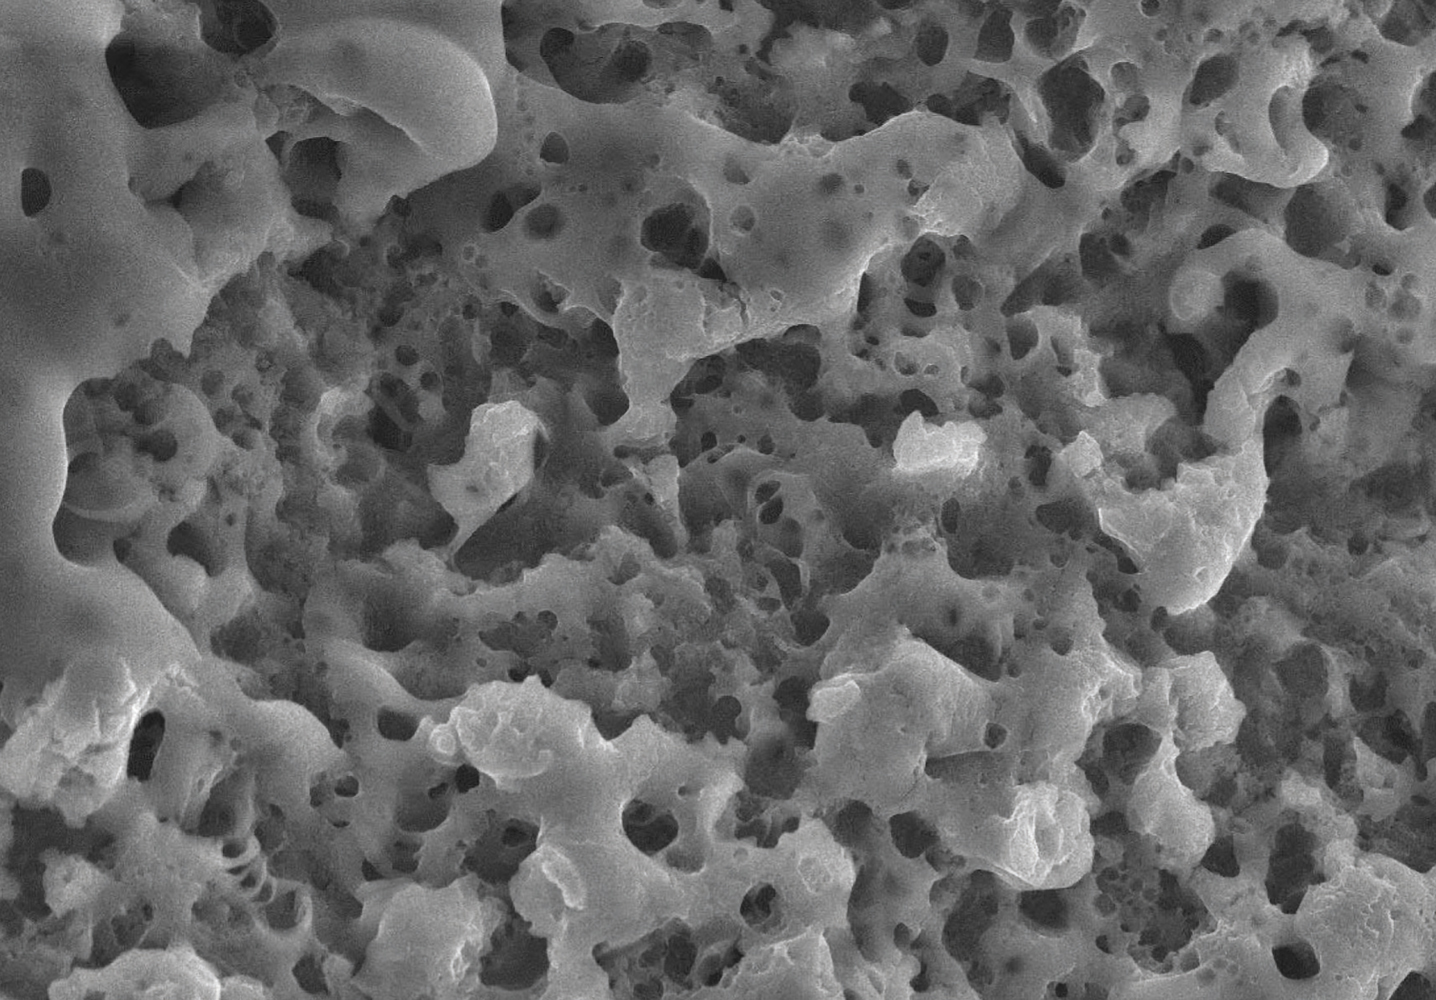 Biosyn-D microscope detail